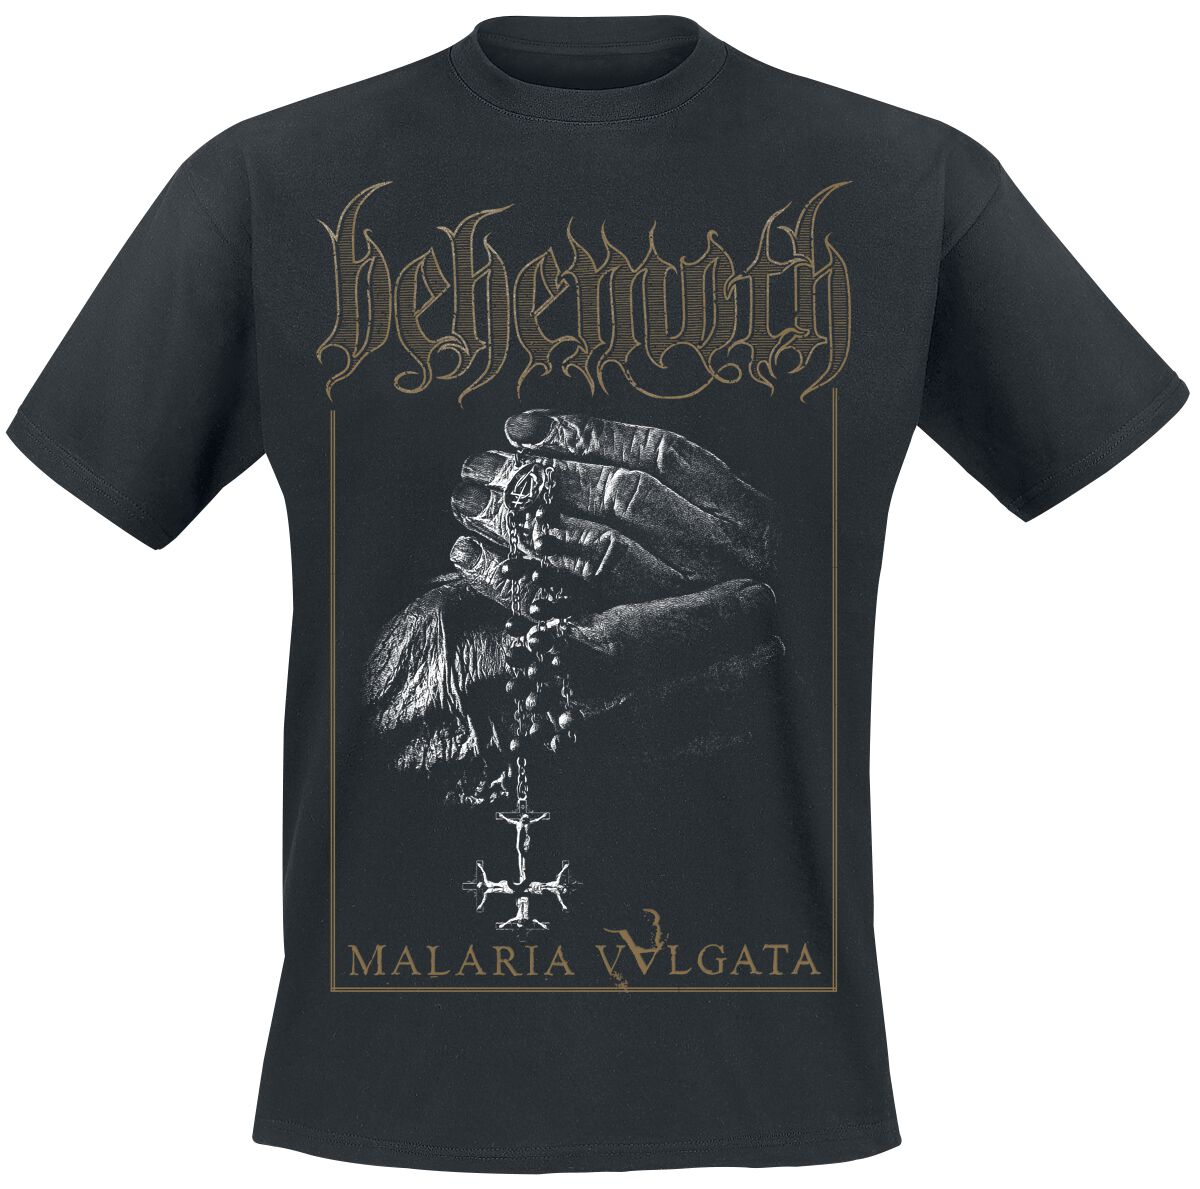 Behemoth Malaria Vvlgata T-Shirt schwarz in M